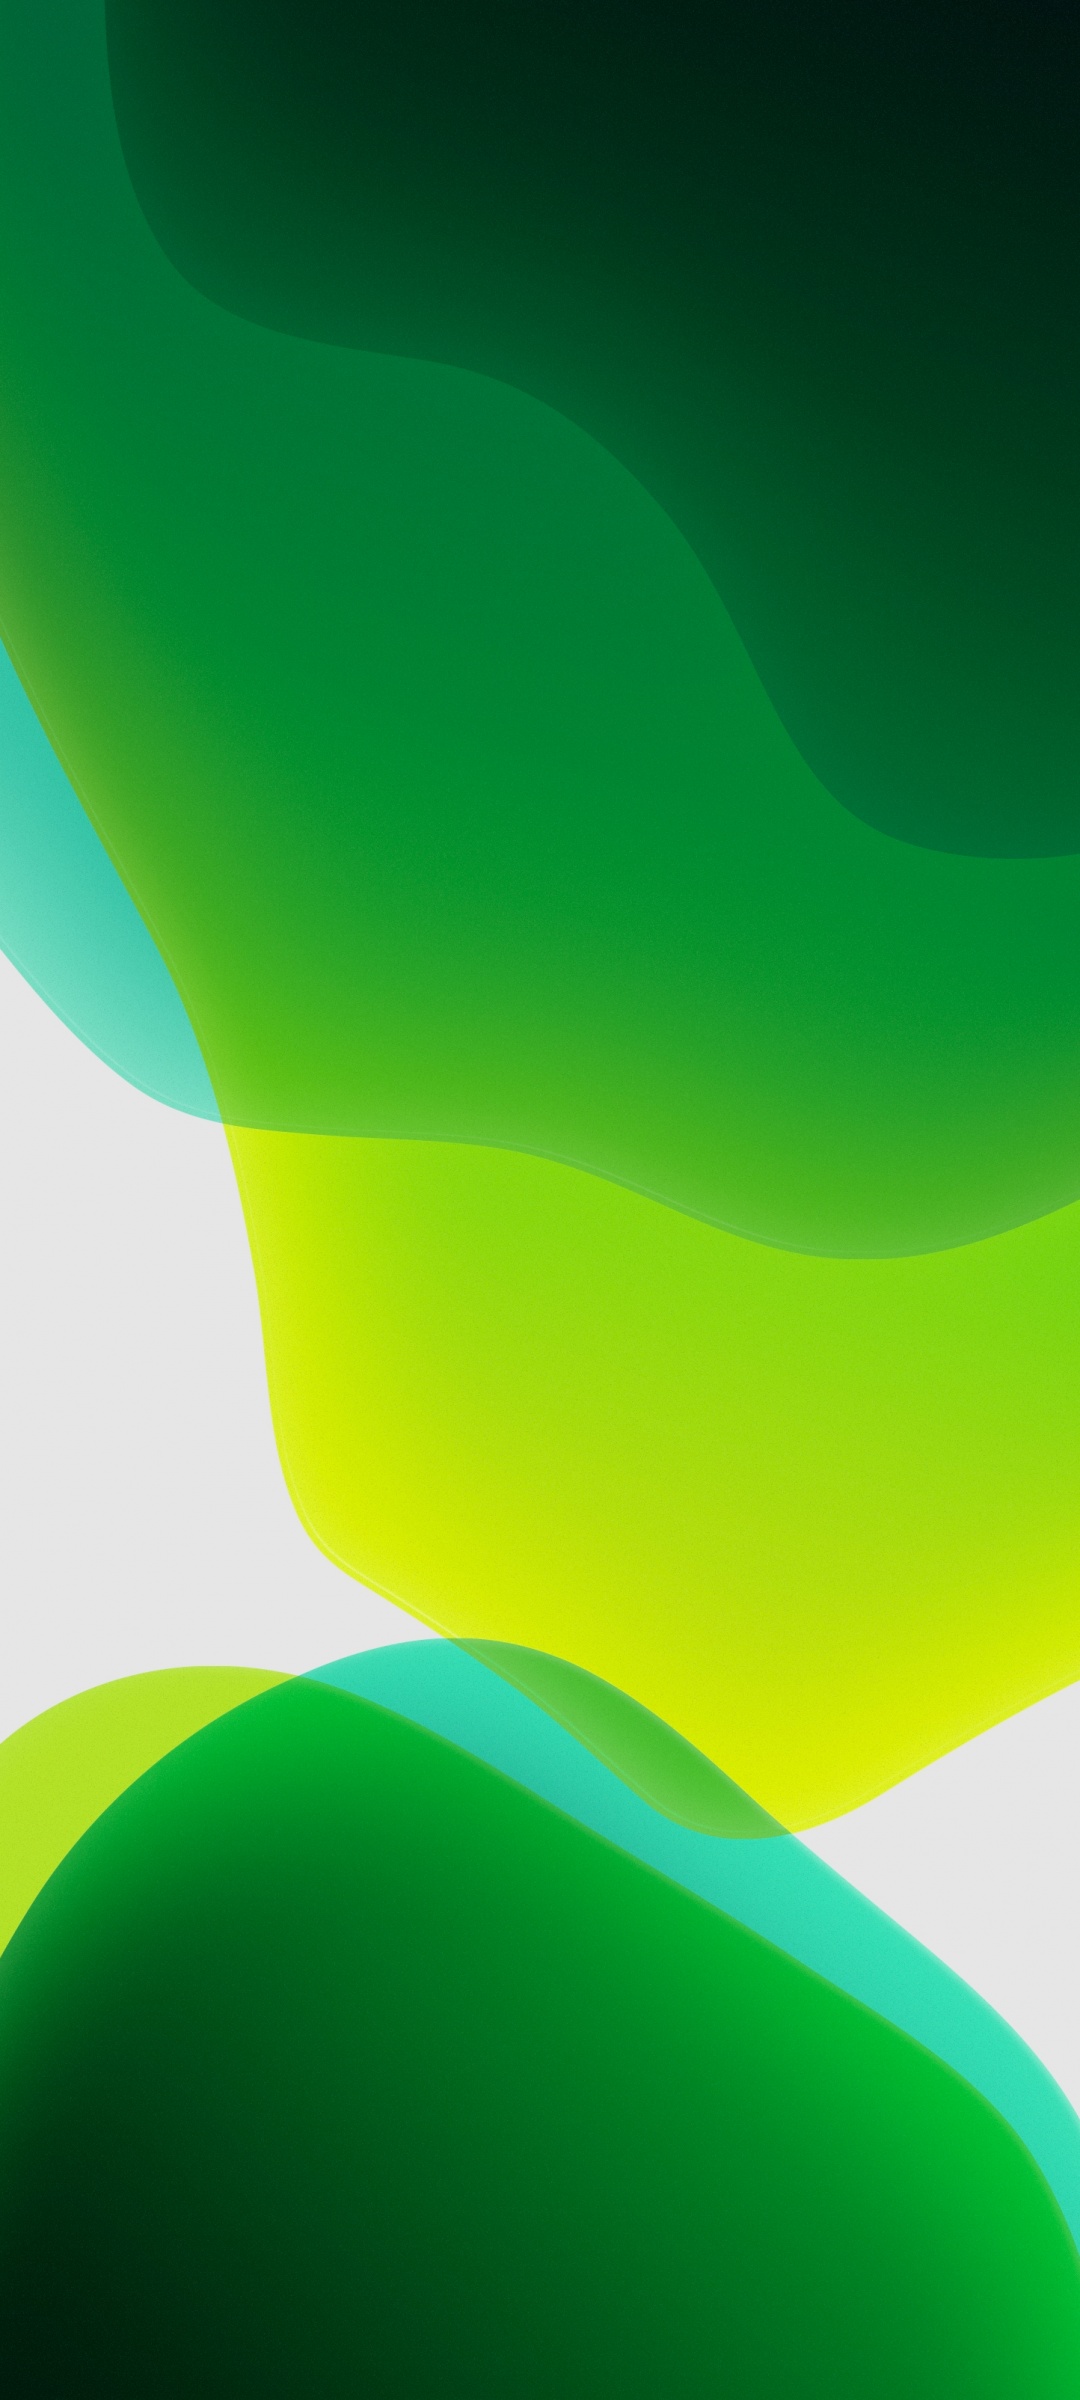 iPadOS Wallpaper 4K, Stock, Green, White background, iPad, iOS 13, HD